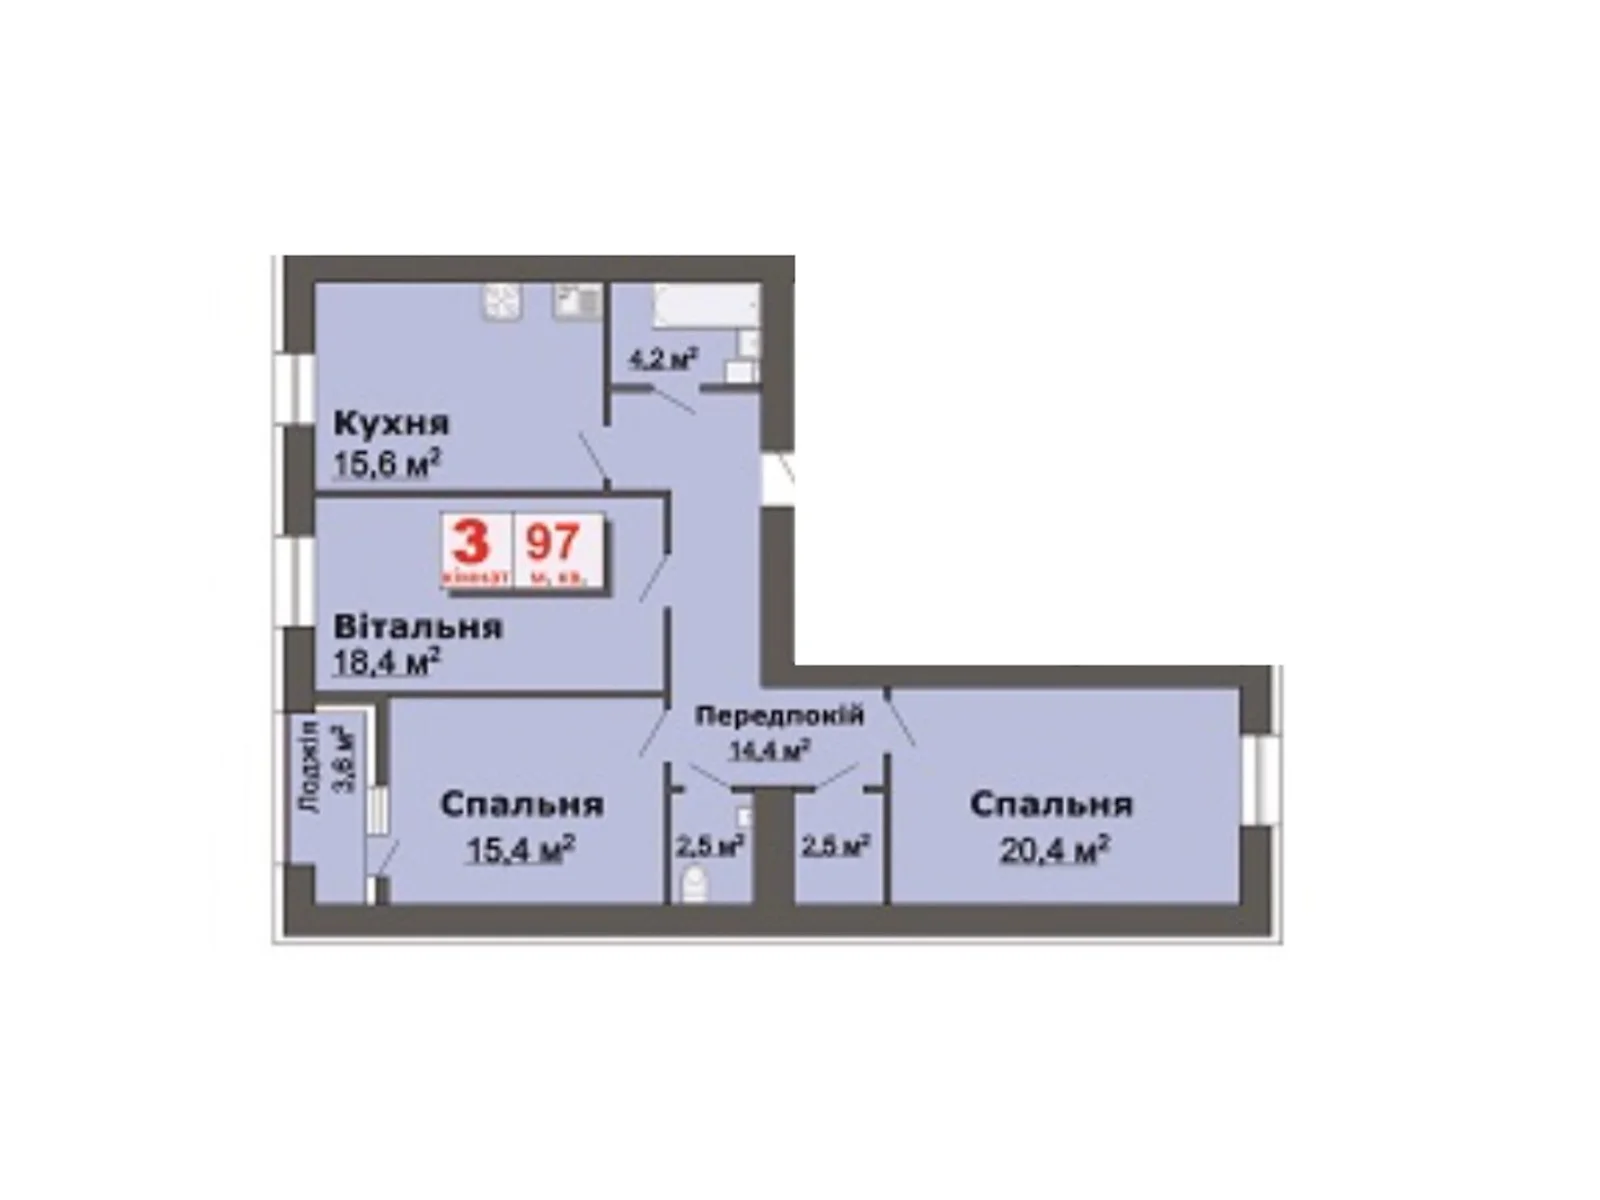 Продается 3-комнатная квартира 97.3 кв. м в Змиенце, цена: 83061 $